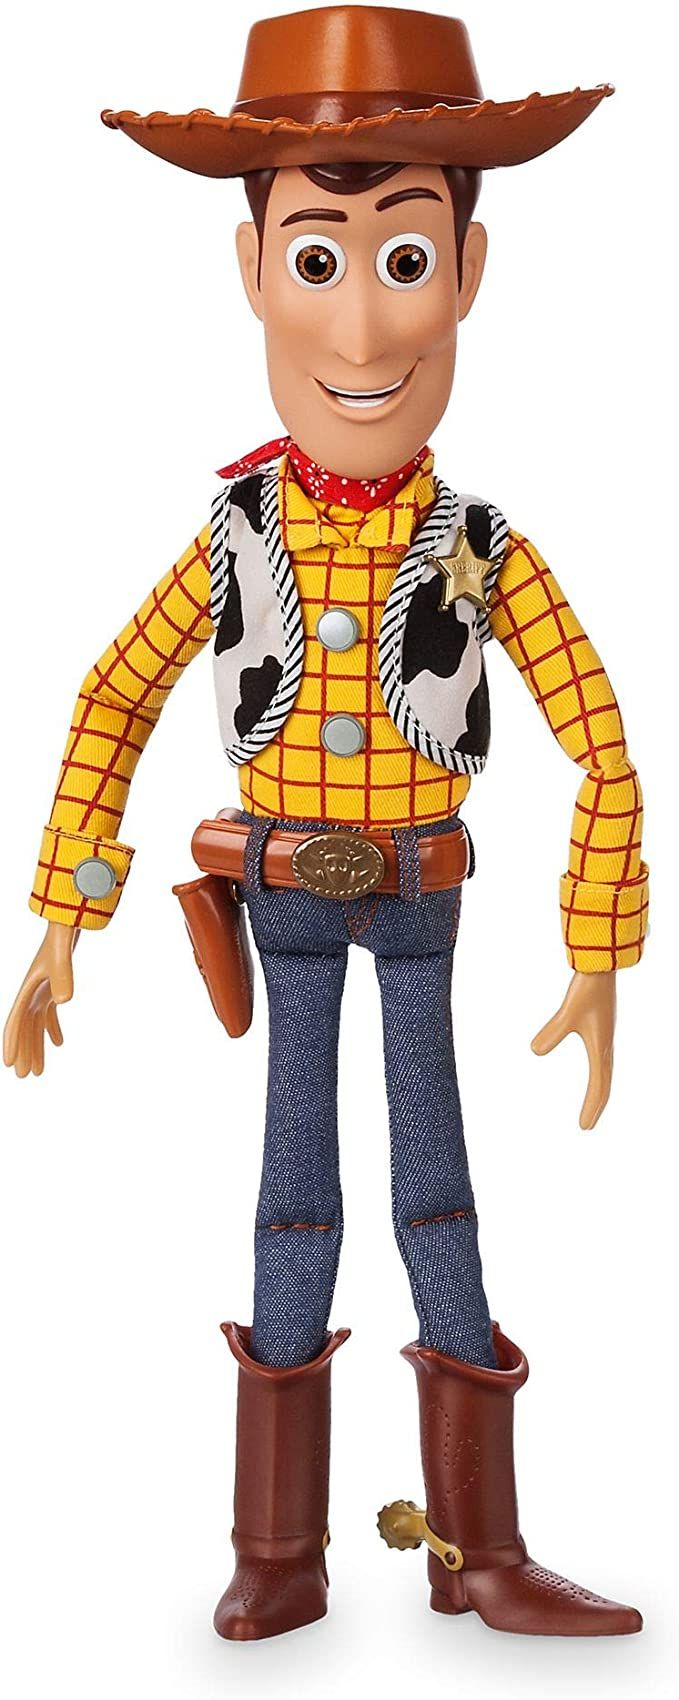 Amazon.com: Disney Woody Interactive Talking Action Figure - Toy Story 4 - 15 Inches : Toys & Gam... | Amazon (US)